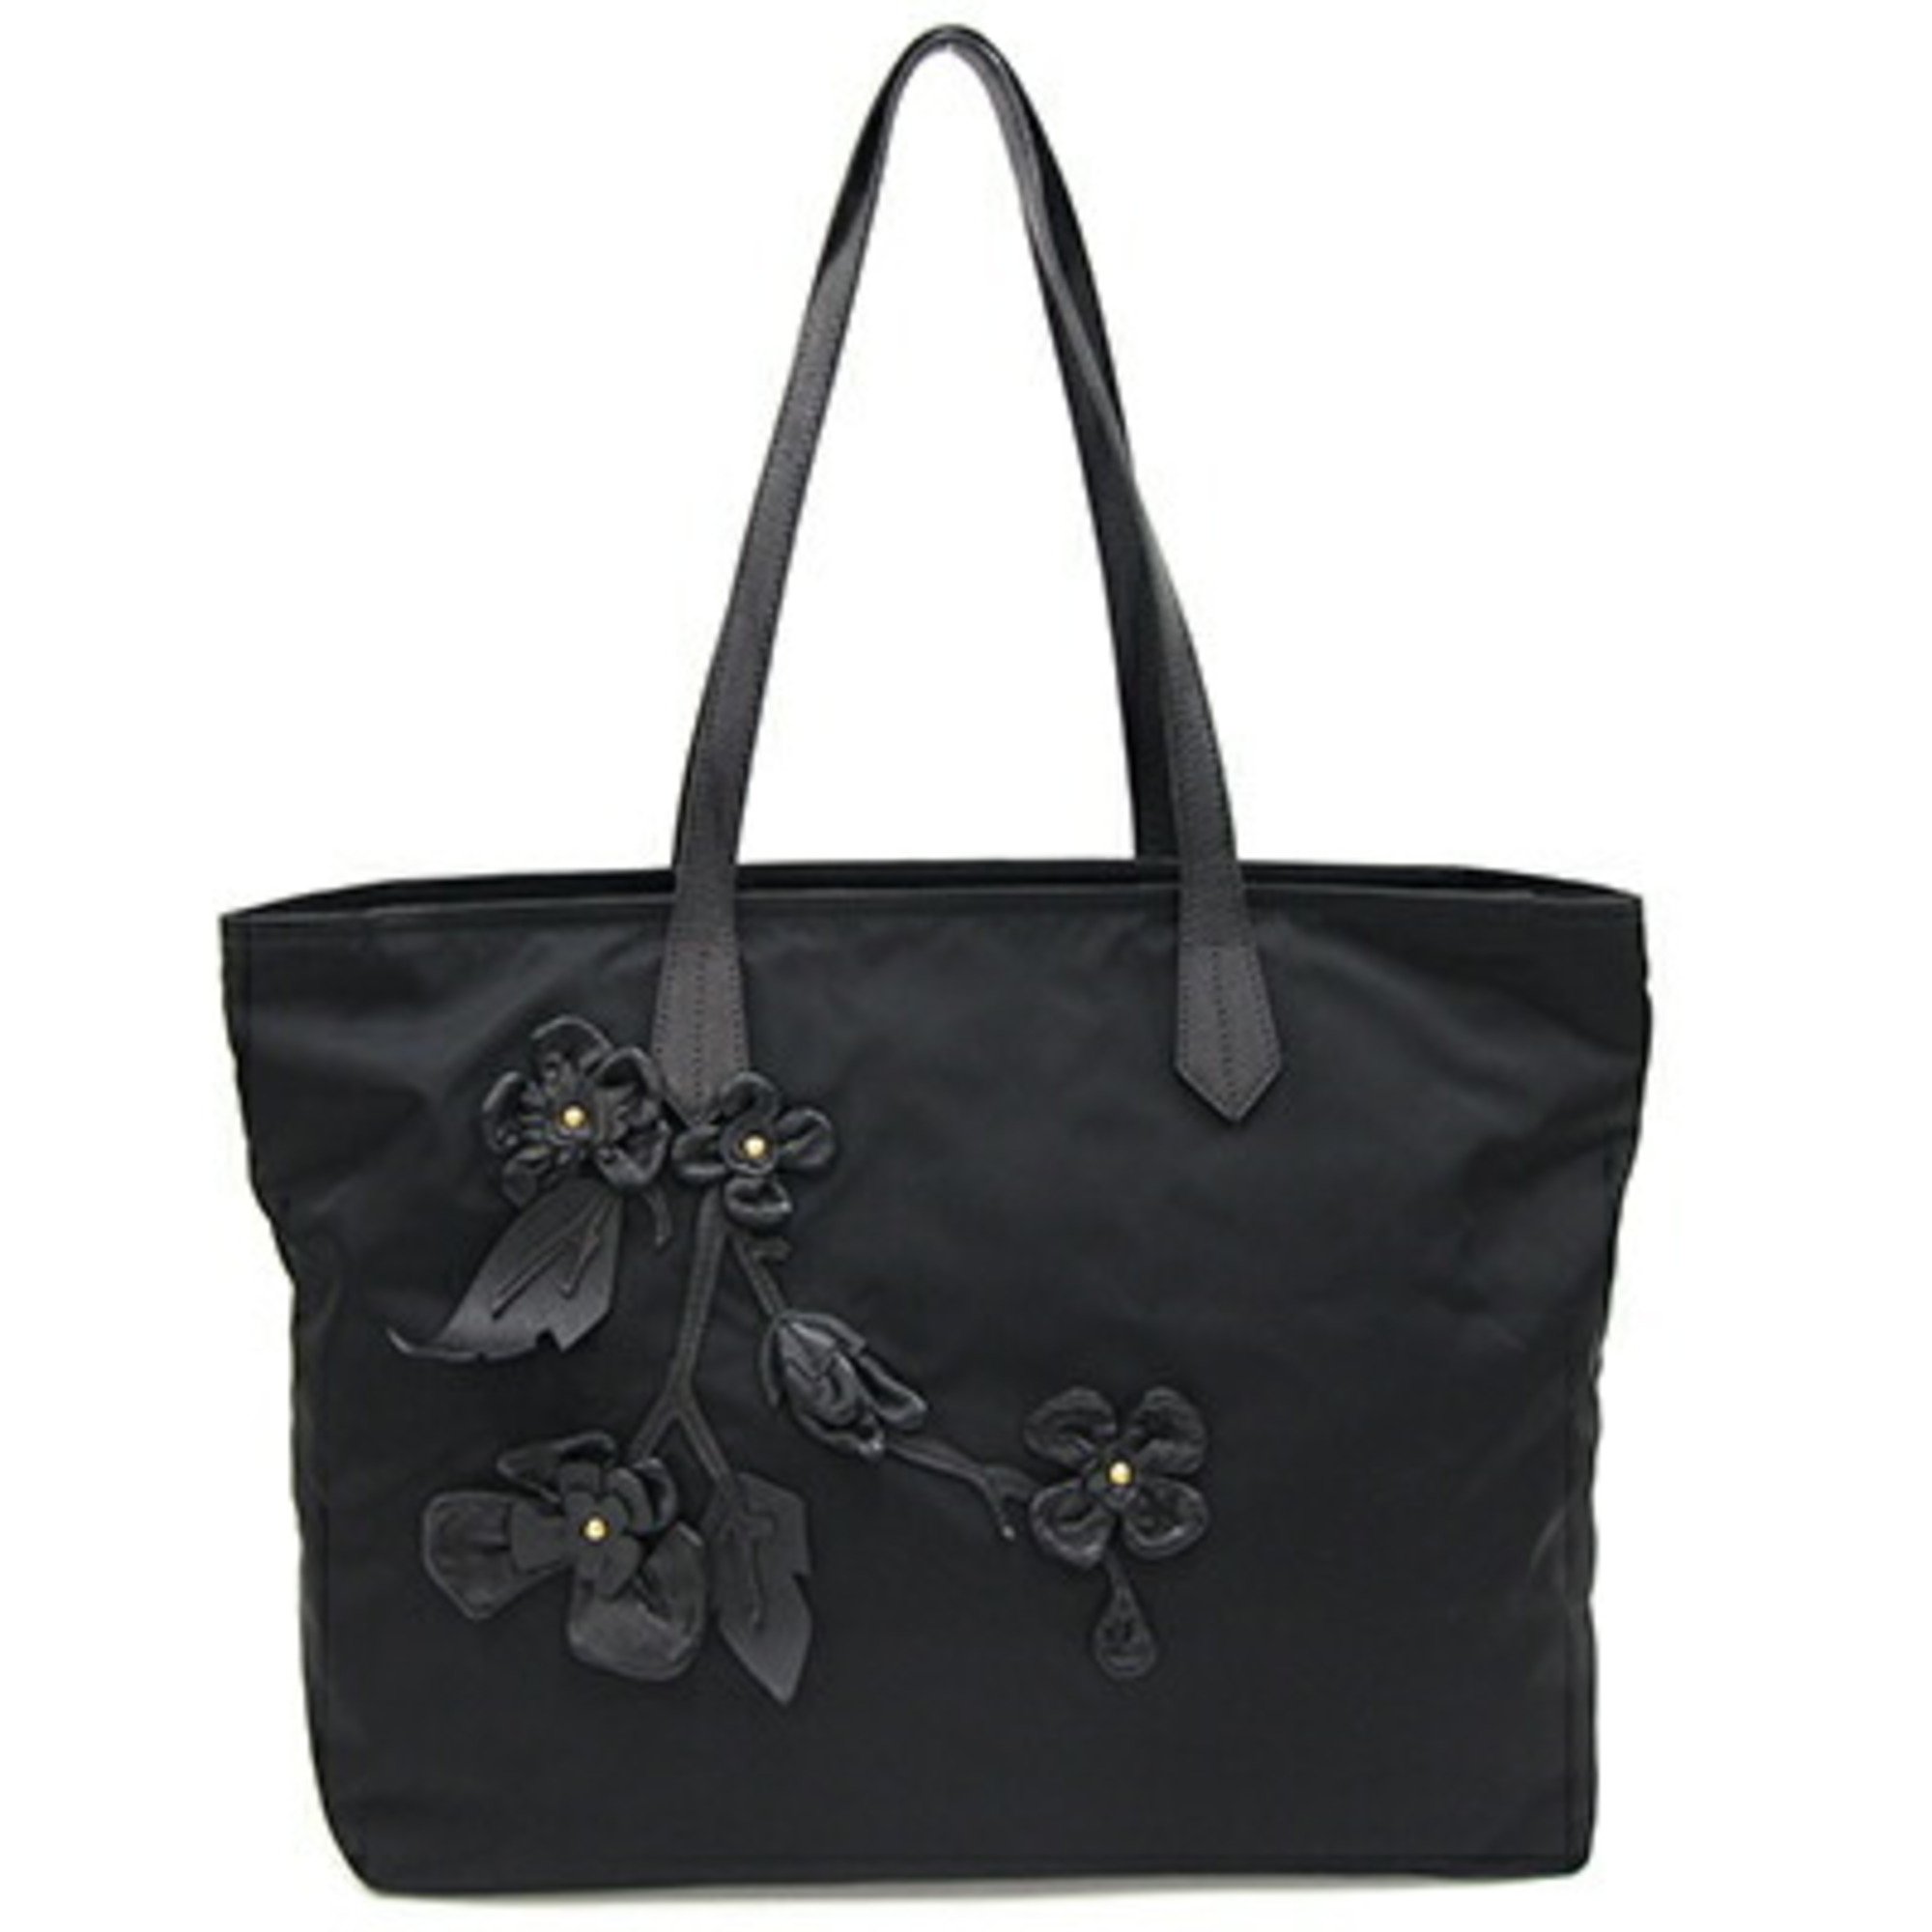 Prada tote bag 1BG052 black nylon leather shoulder flower motif ladies PRADA